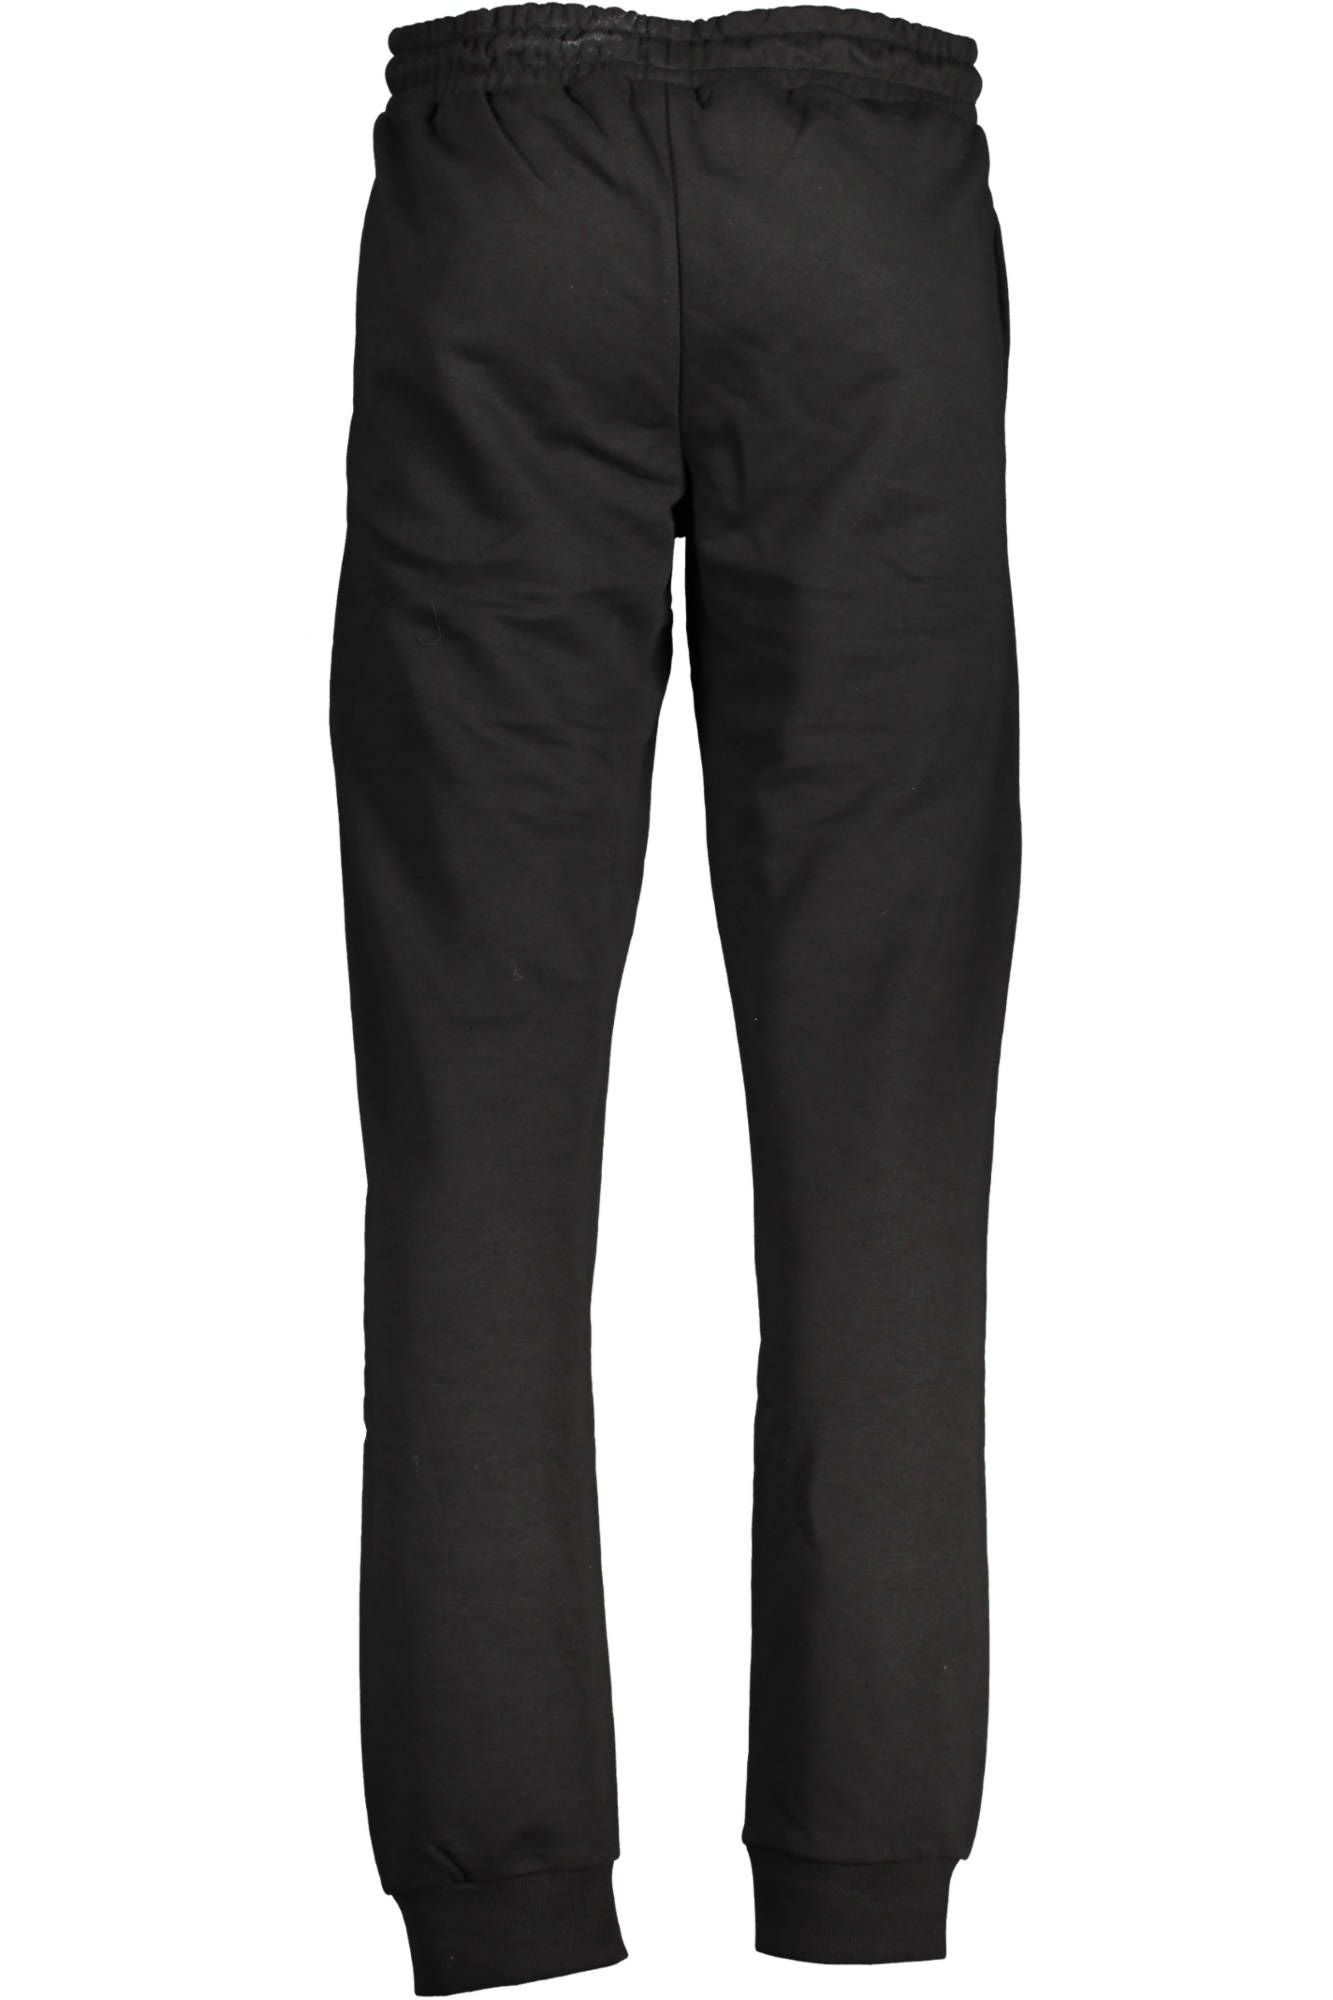 Fila Men's Athletic Cotton Trousers - Black, Comfortable & Stylish Sports Apparel